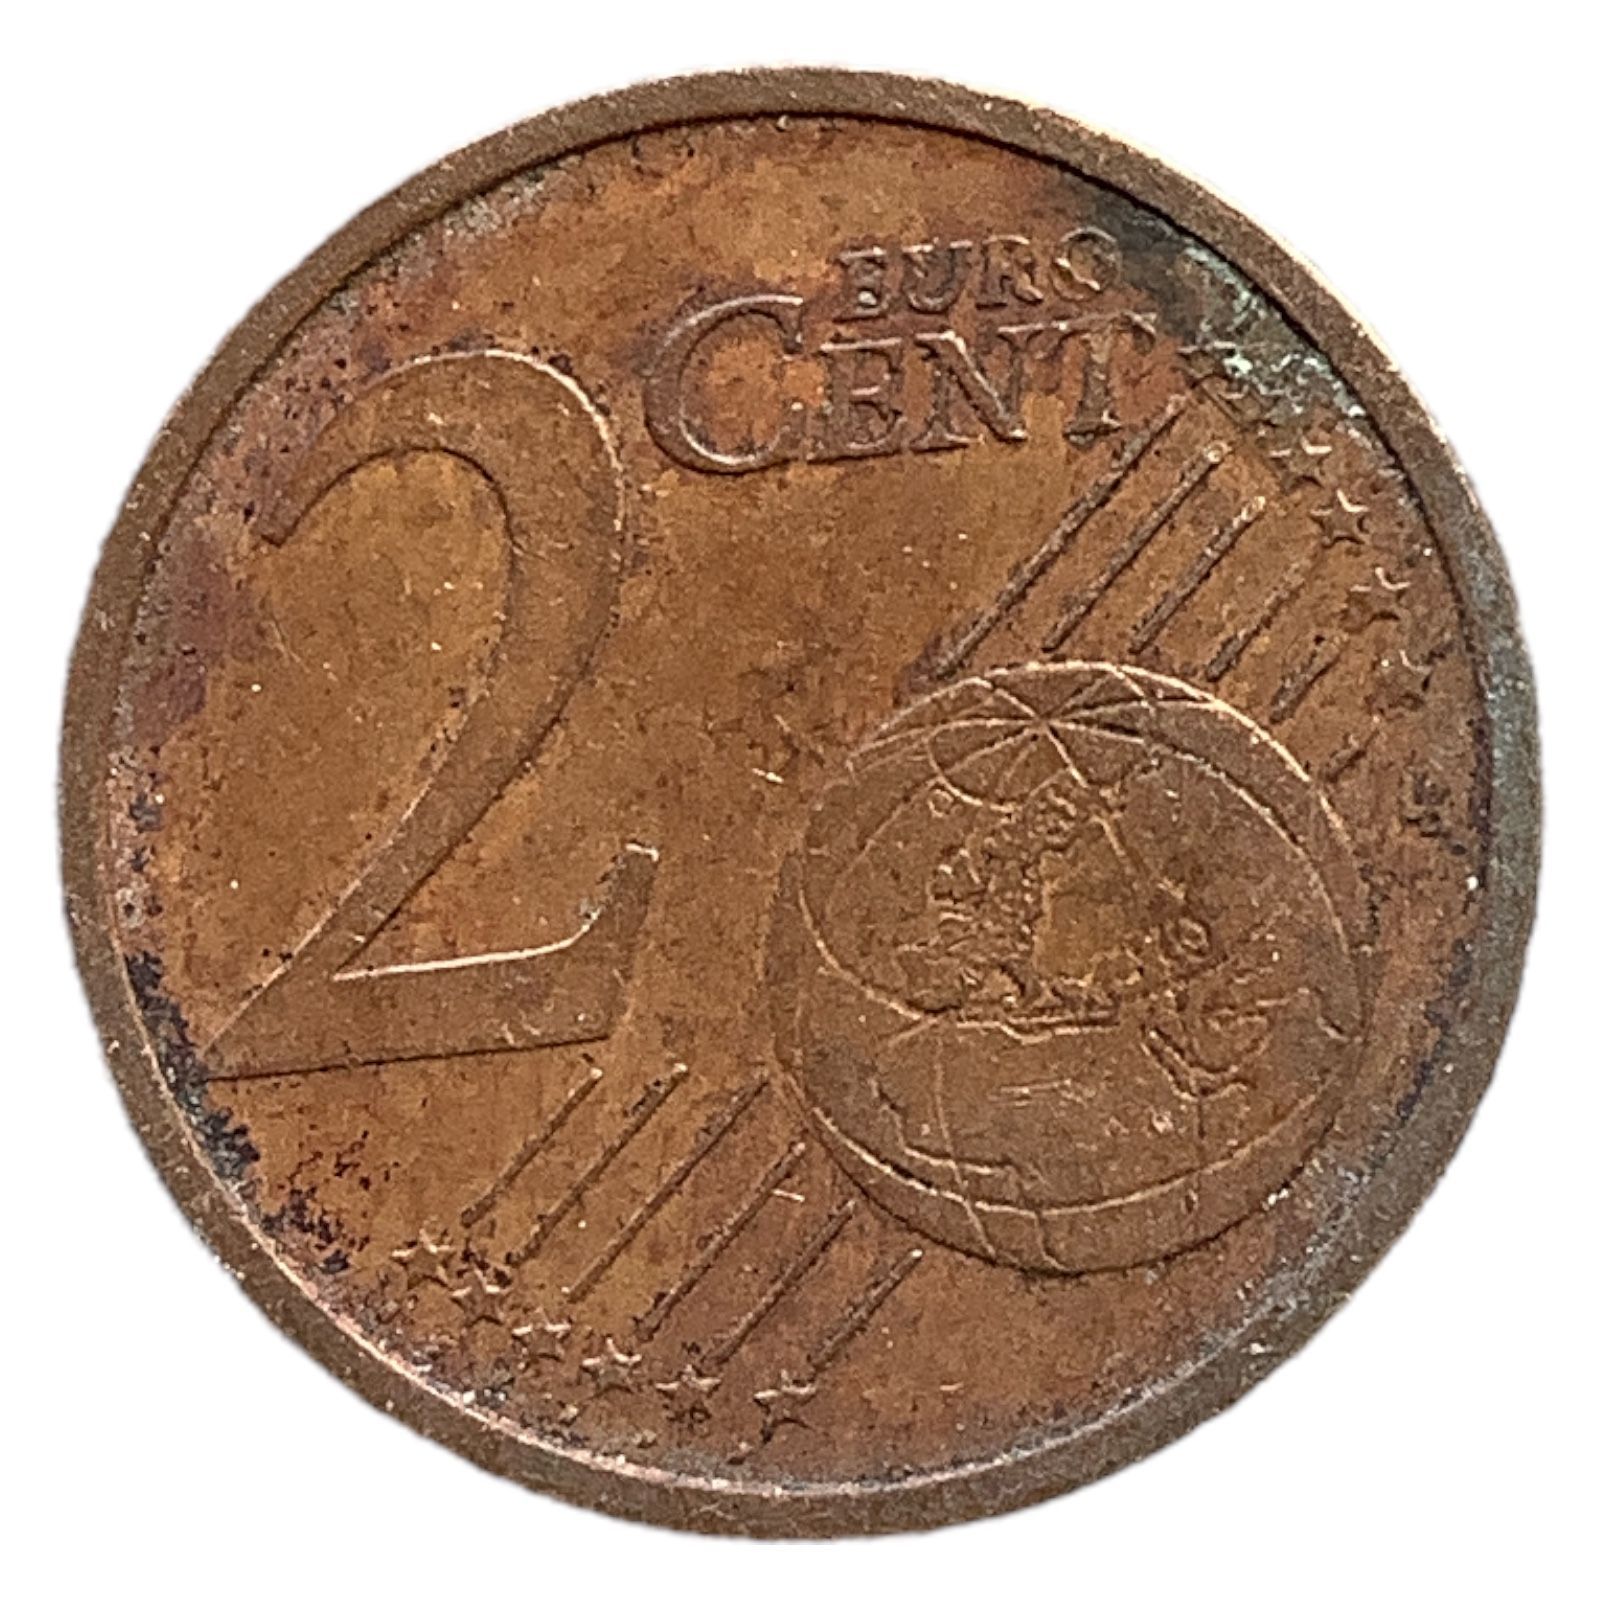 2 Цента Германия. Монеты Англии 2 цента 2002. Цент монета. 2 Цента монета. 20 евроцентов в рублях